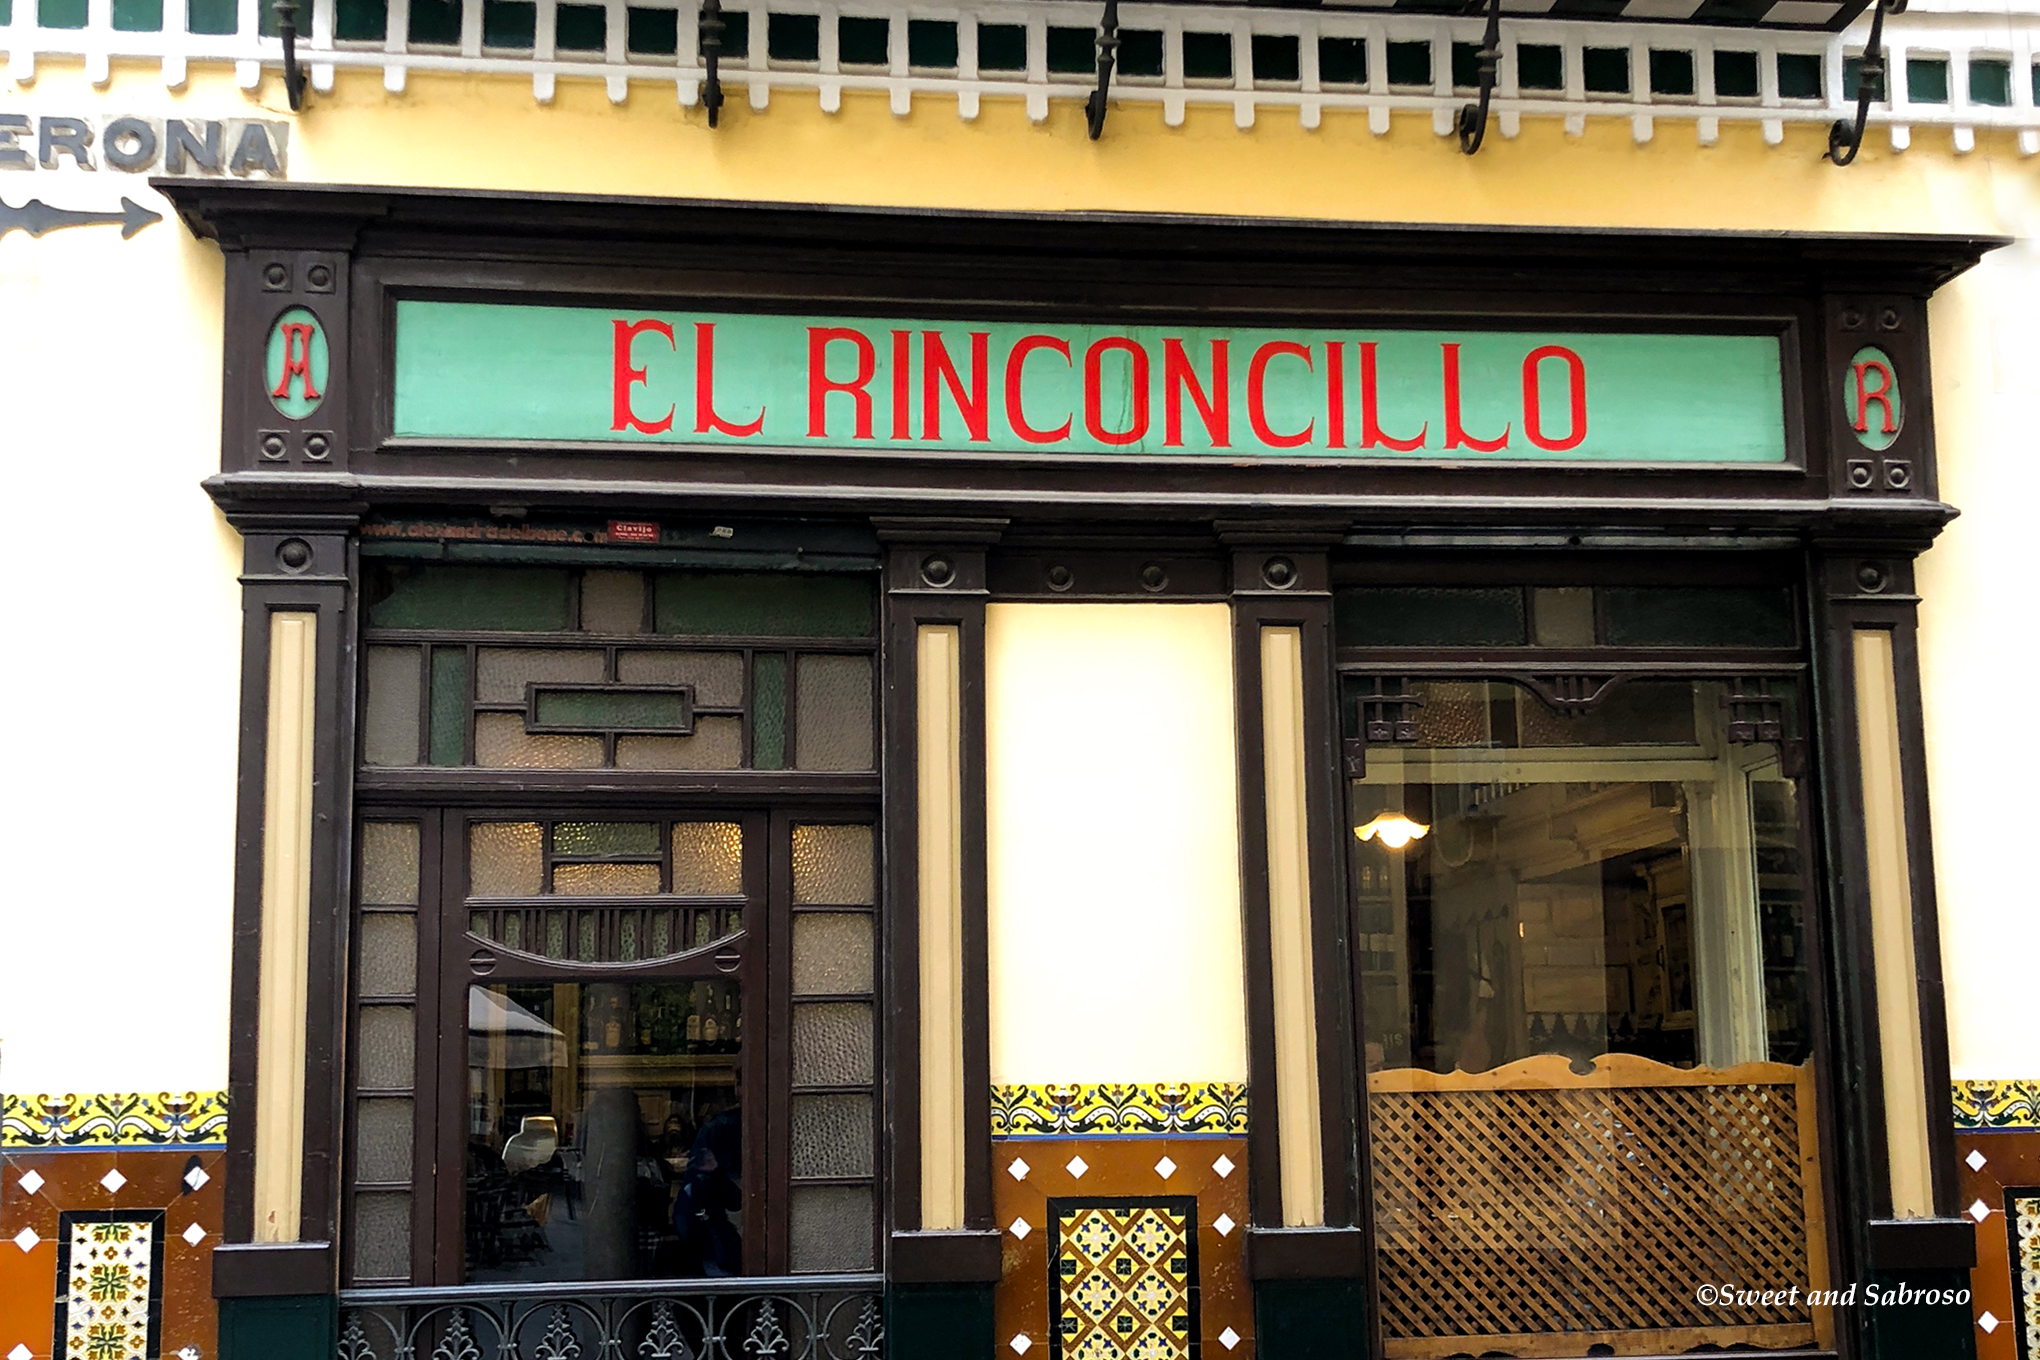 El Rinconcillo Tapas Bar in Seville in Andalusia, Spain